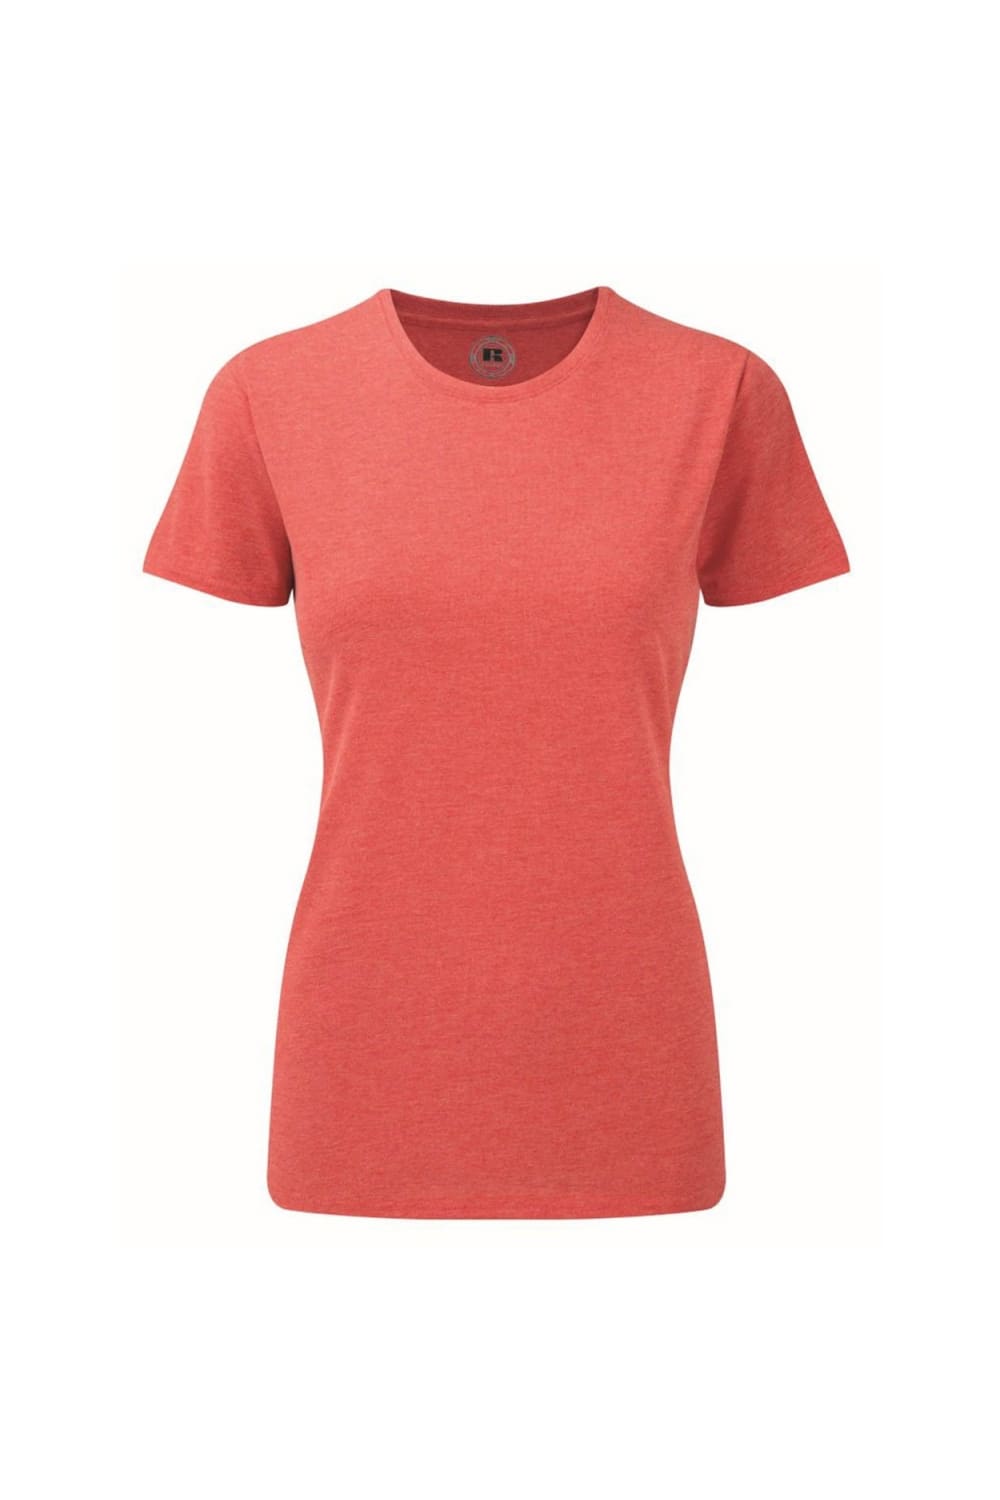 Russell Womens Slim Fit Longer Length Short Sleeve T-Shirt (Red Marl)